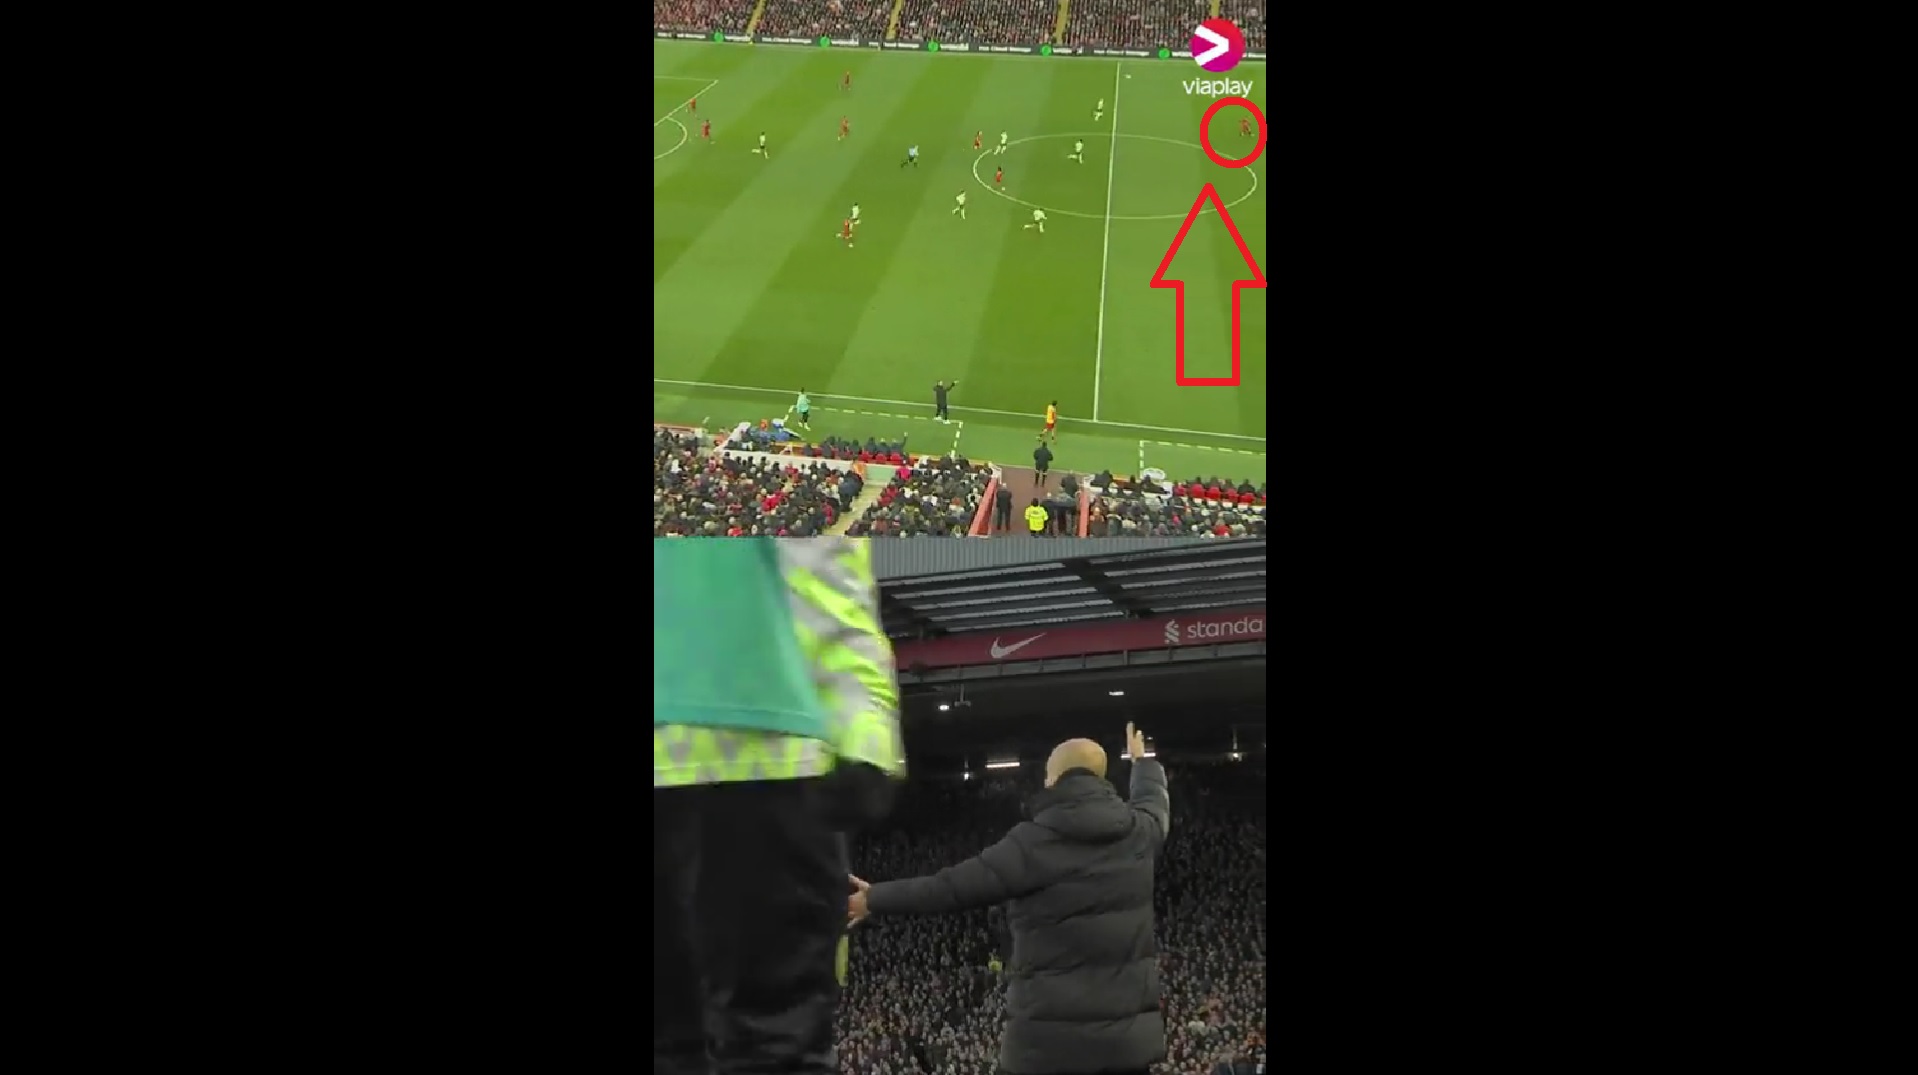 (Video) Guardiola’s meltdown during Salah goal shared in brutal split-screen clip